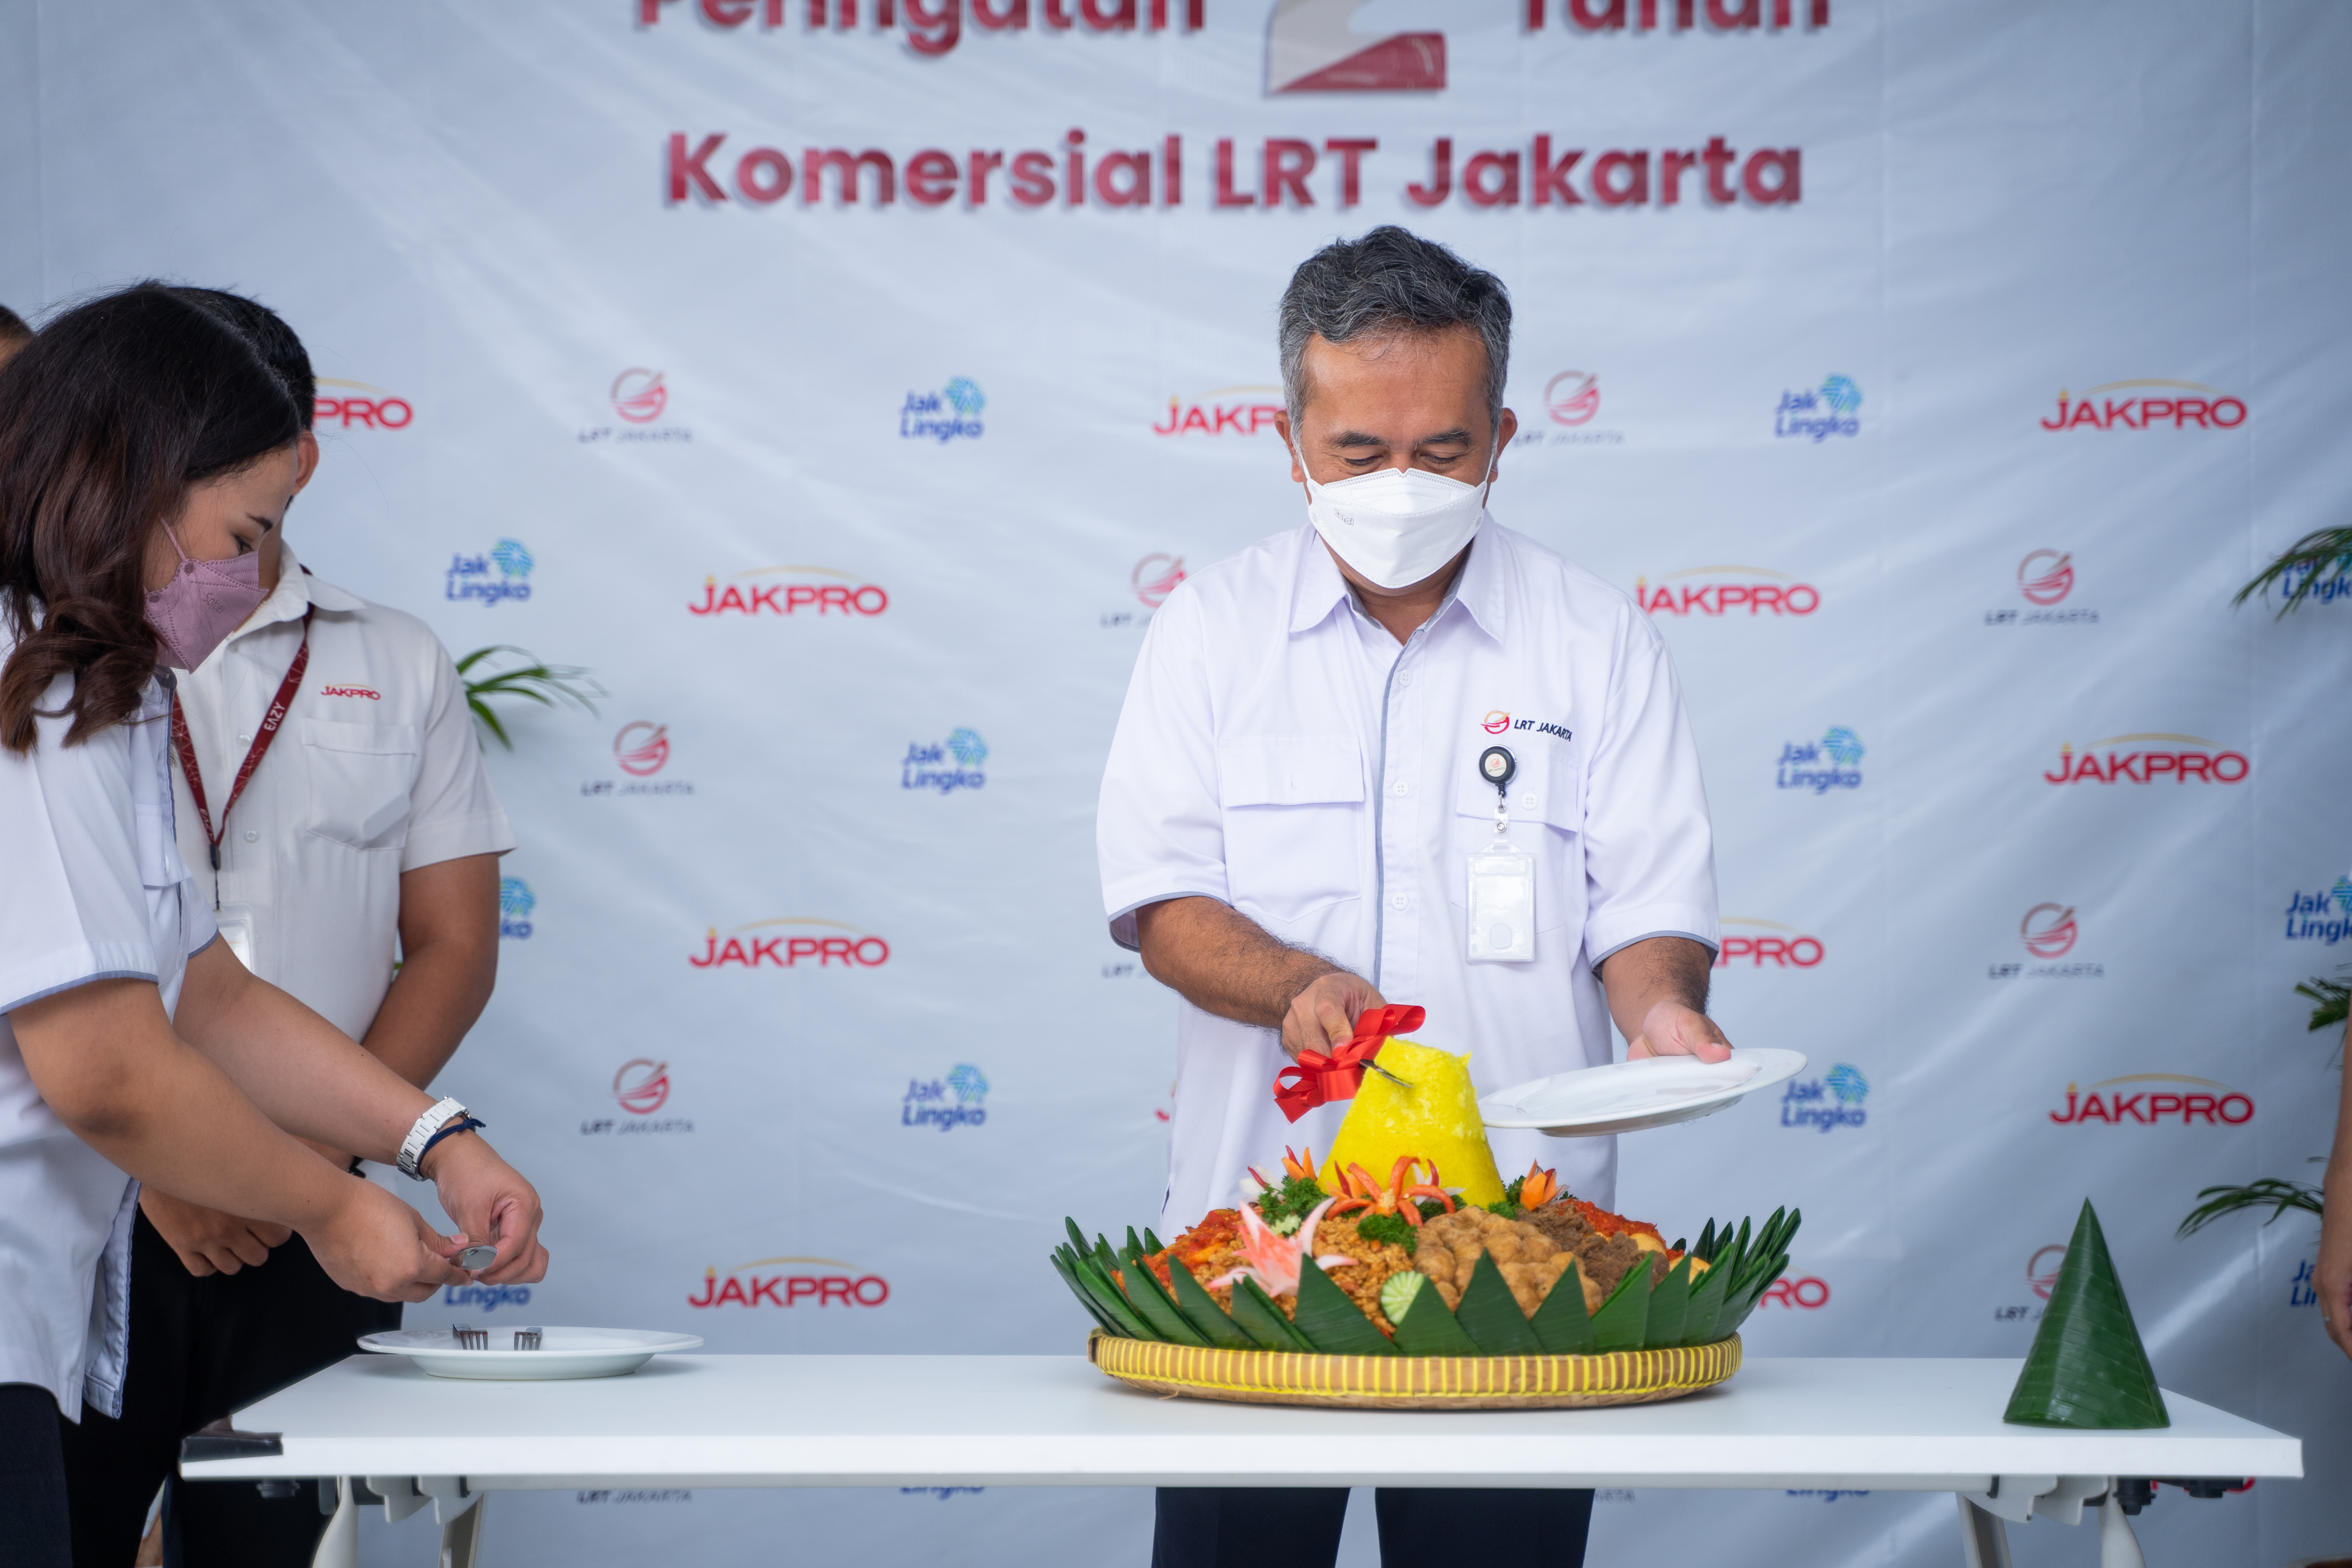 Dua tahun beroperasi, LRT Jakarta siap bertransformasi